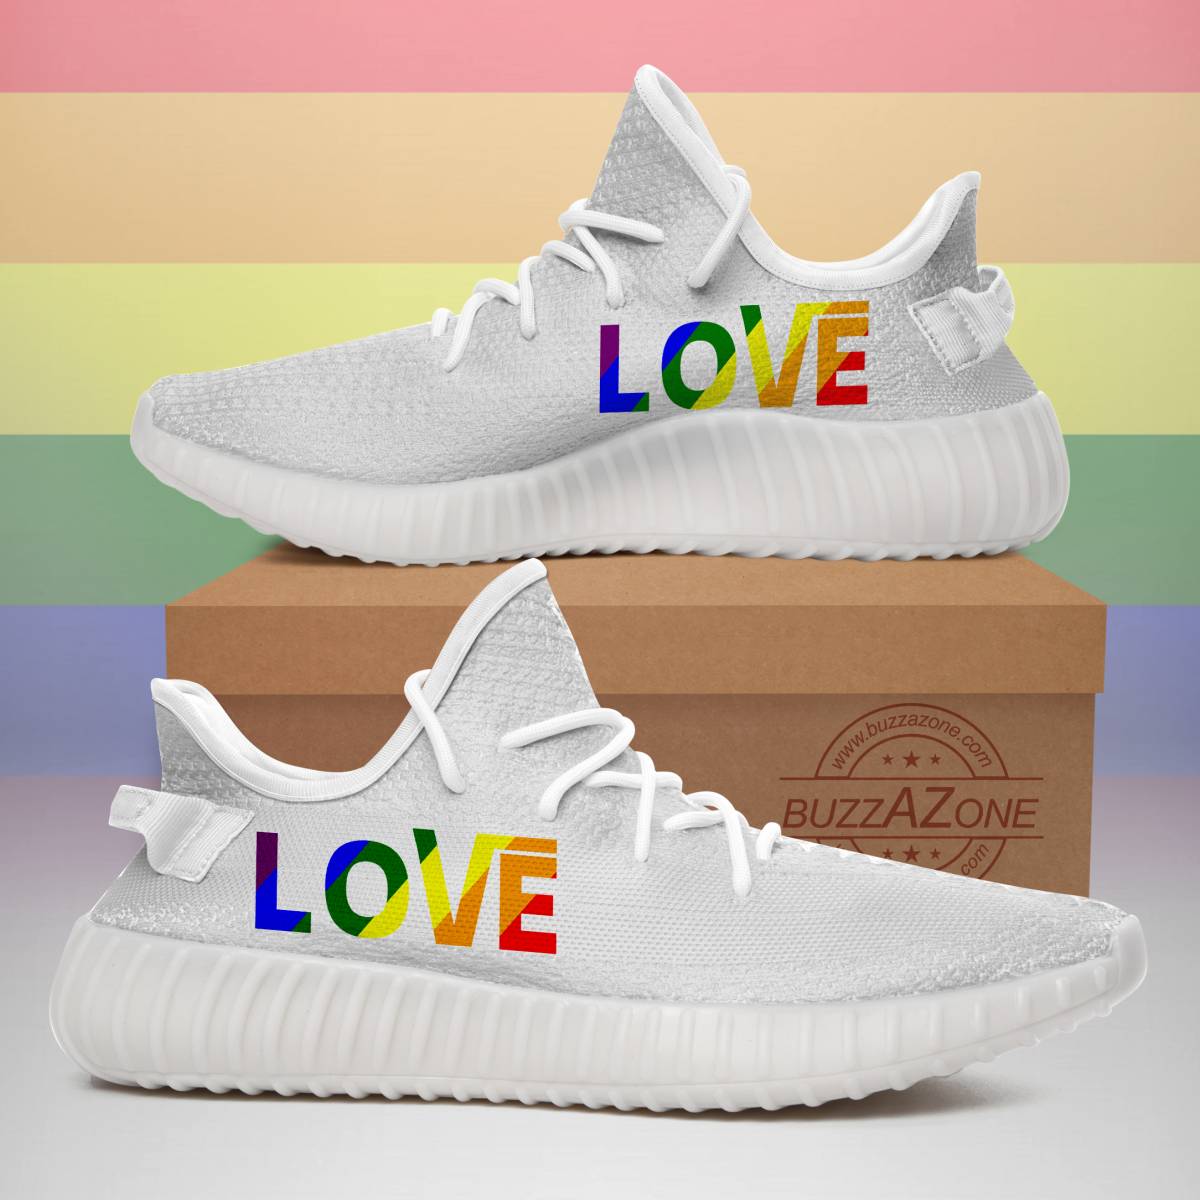 LGBT love custom yeezy shoes 4